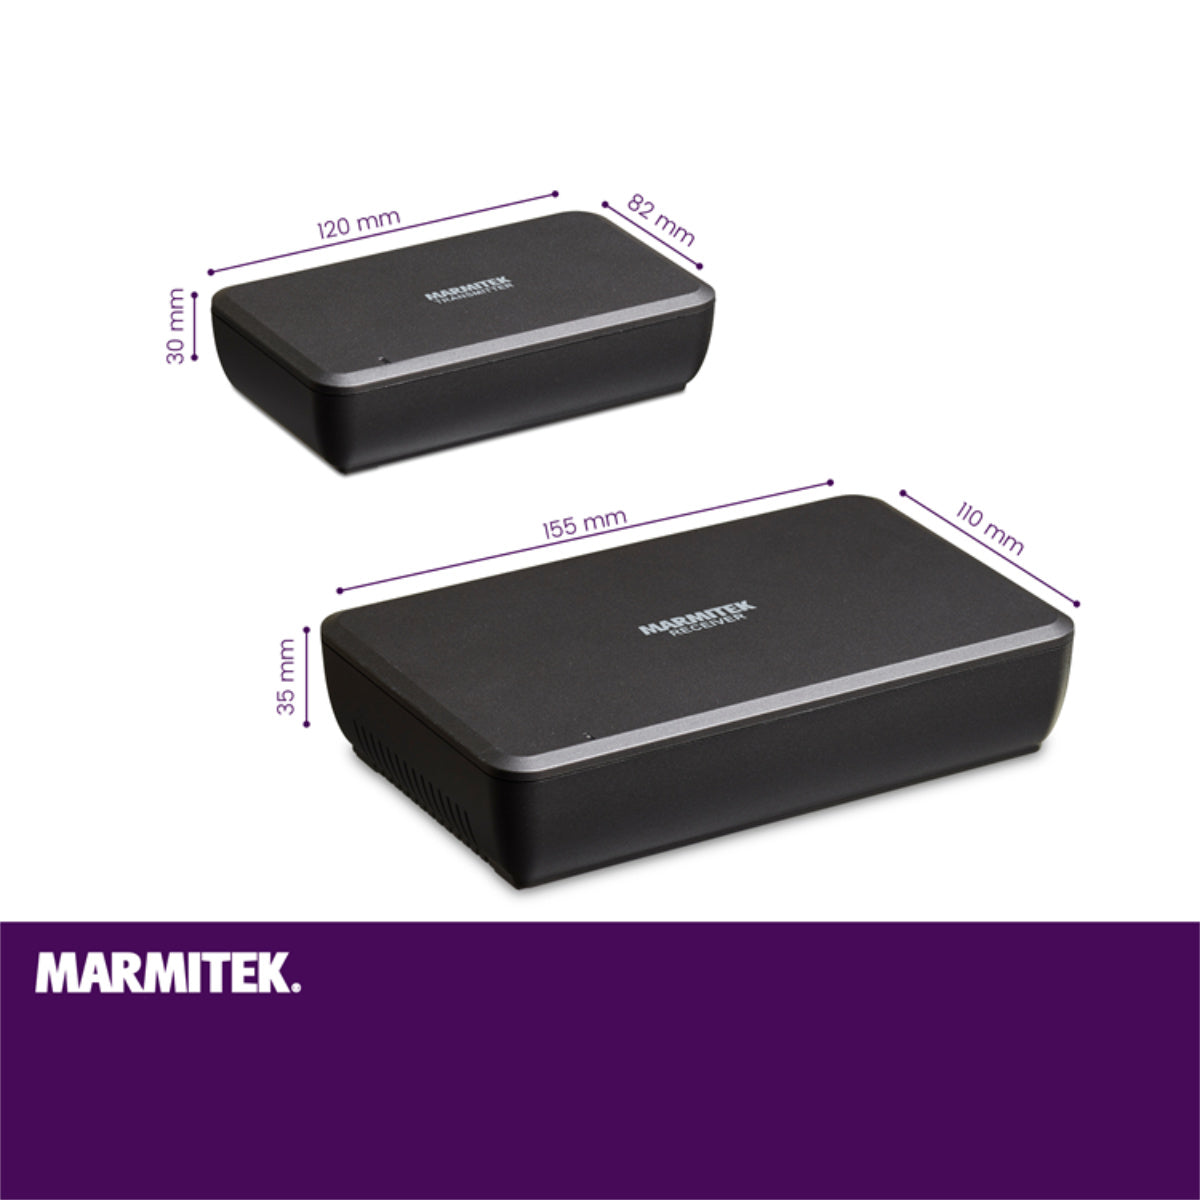 Marmitek Surround Anywhere 221 wireless amplifier for speakers 